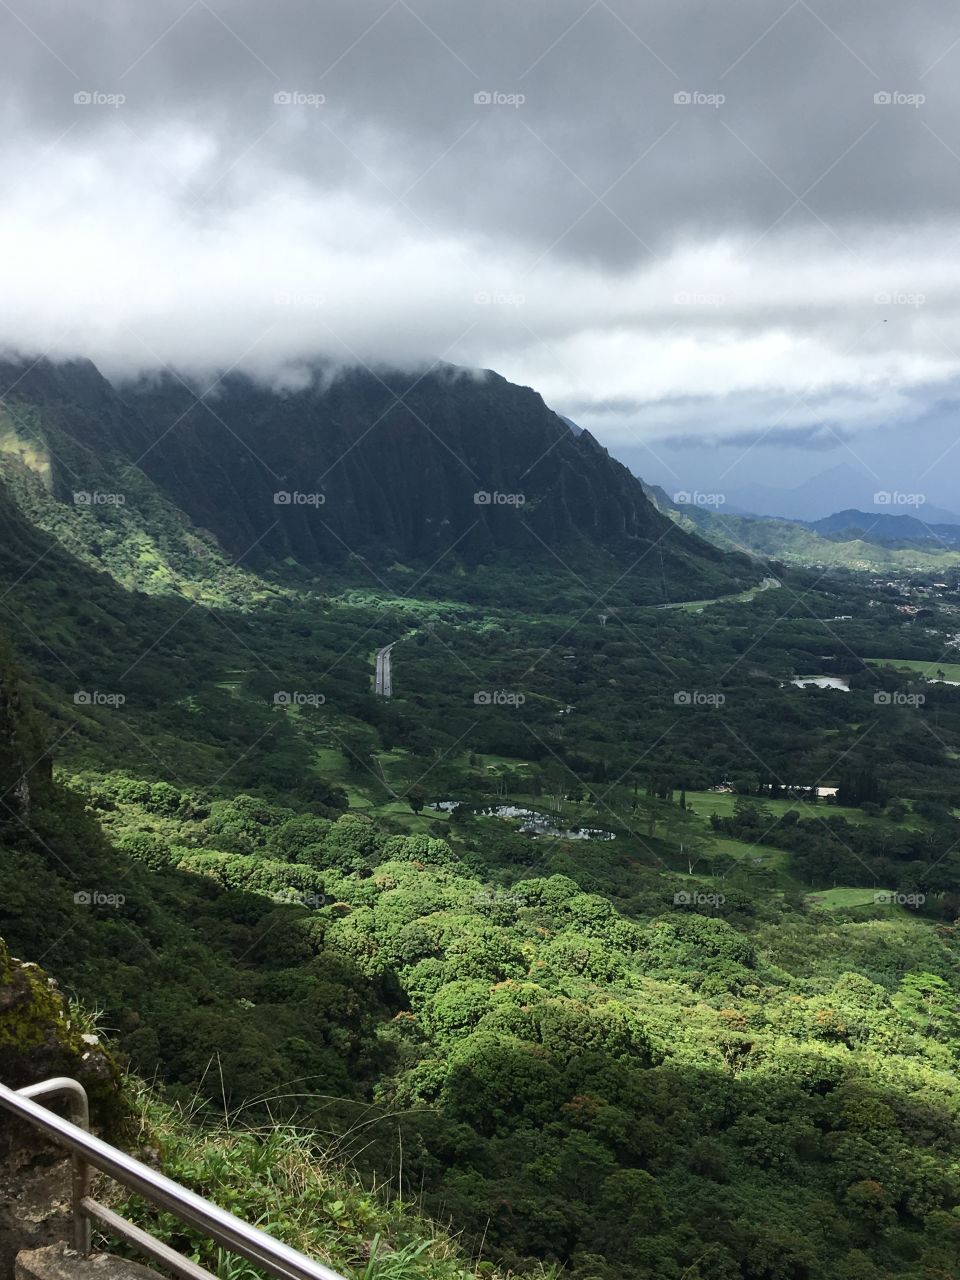 The breathtaking Pali lookout in Oahu Hawaii.  Fit for Kings!